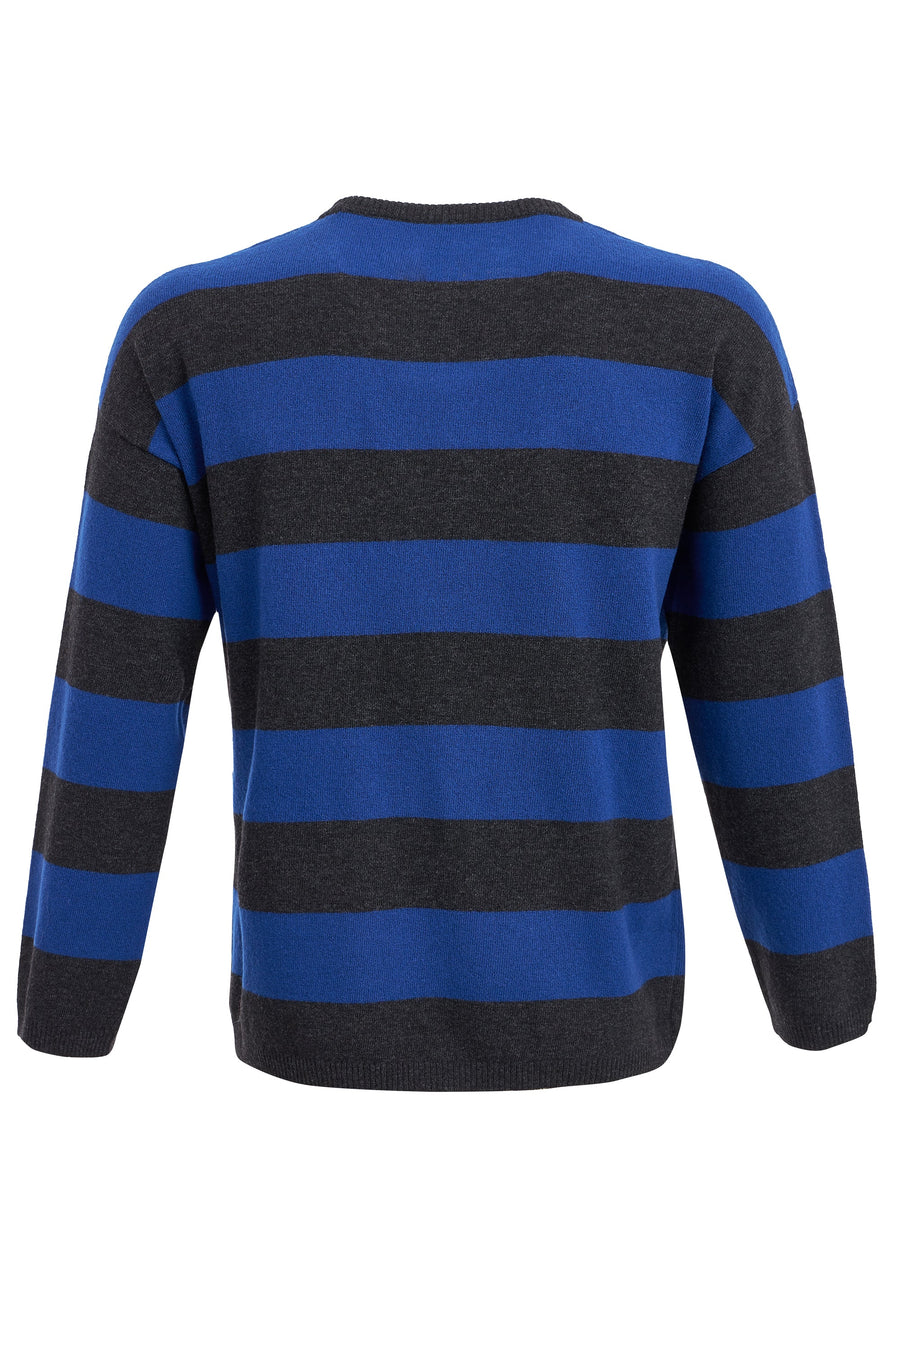 North Unisex Oversize Sweater